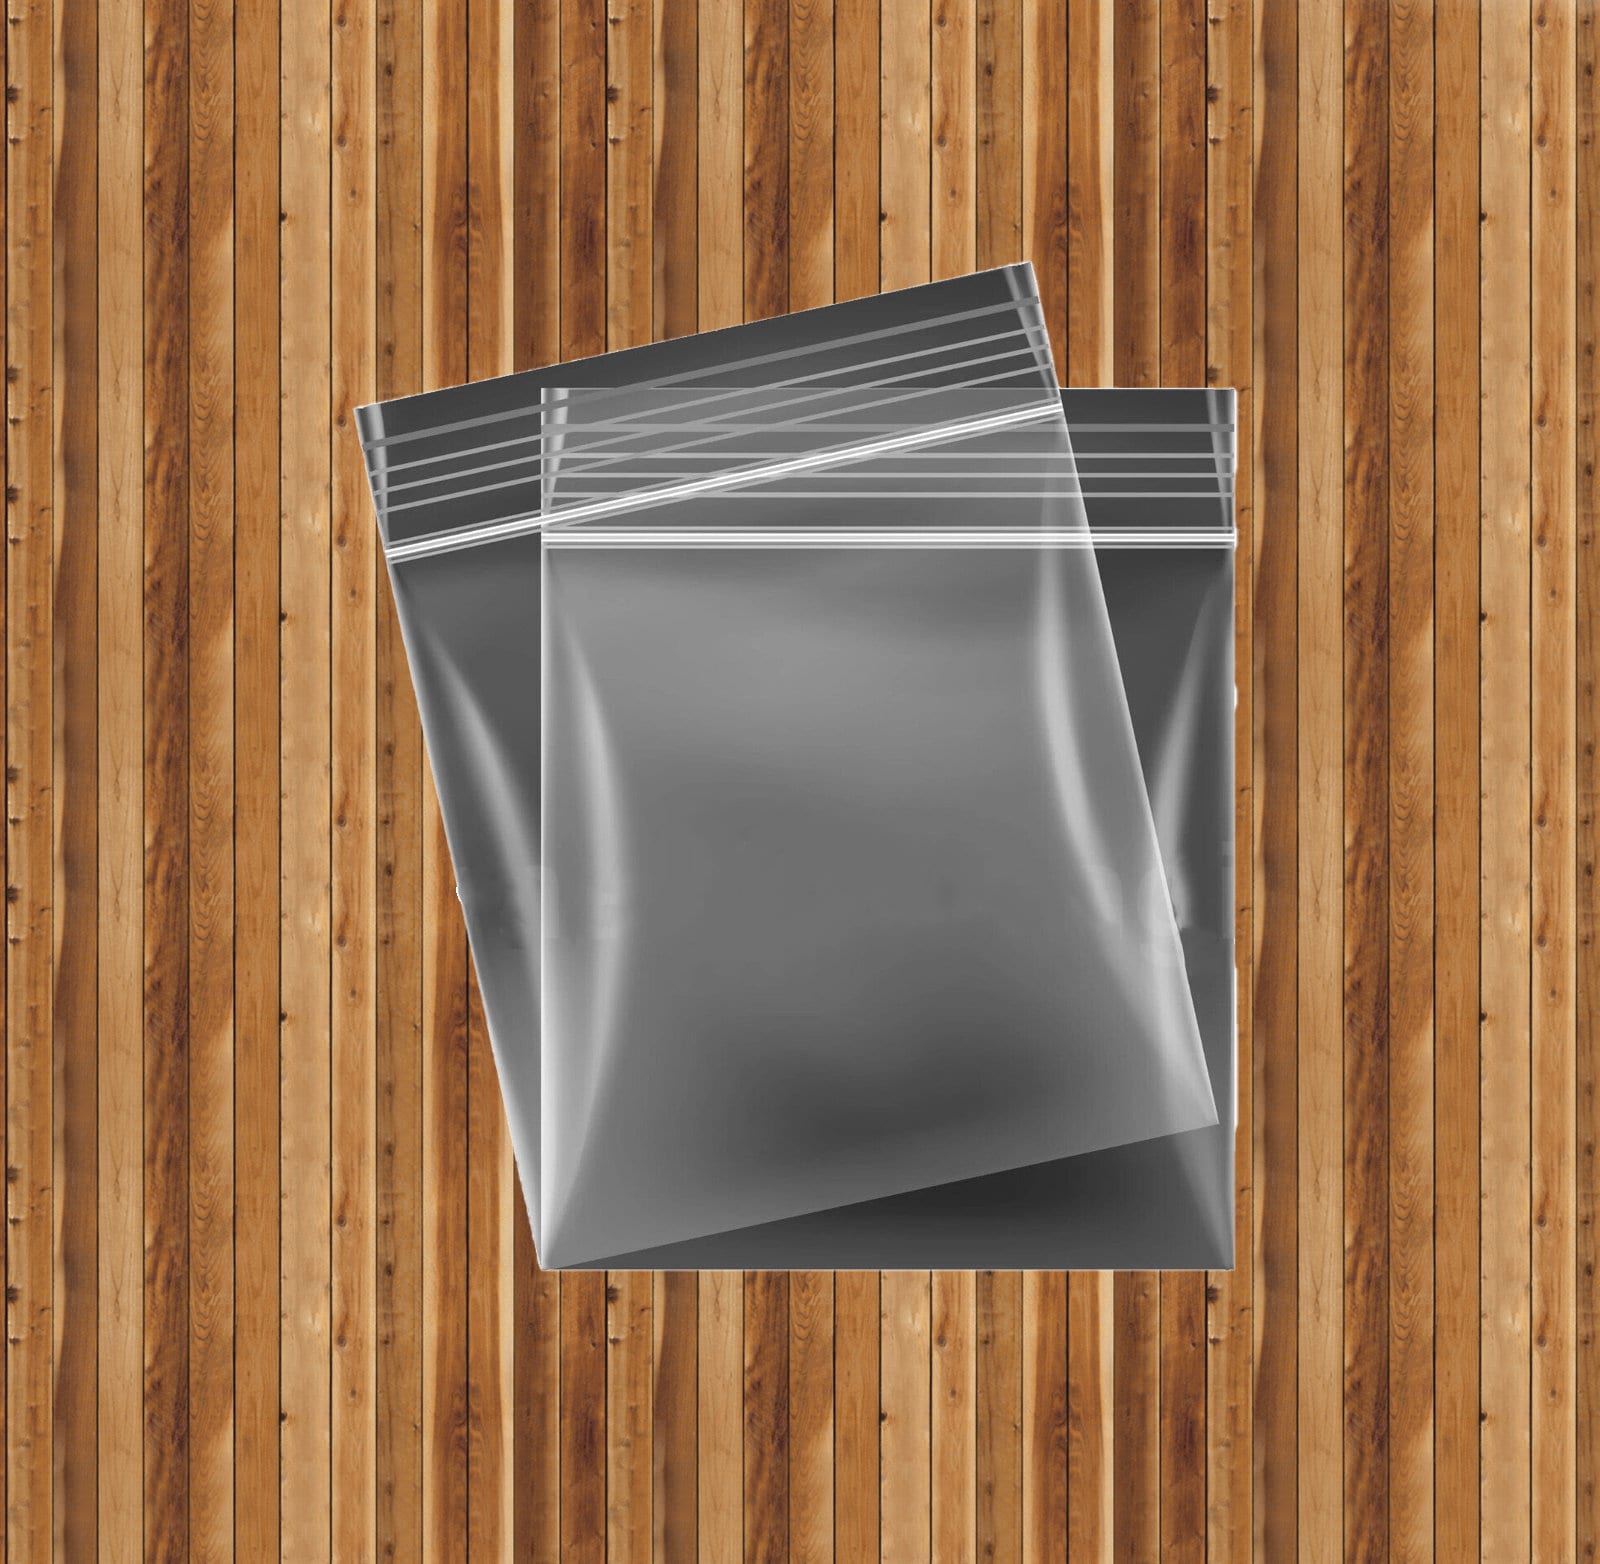 50x Clear Plastic Self Adhesive Seal Bag, 7cm X 9cm Cello